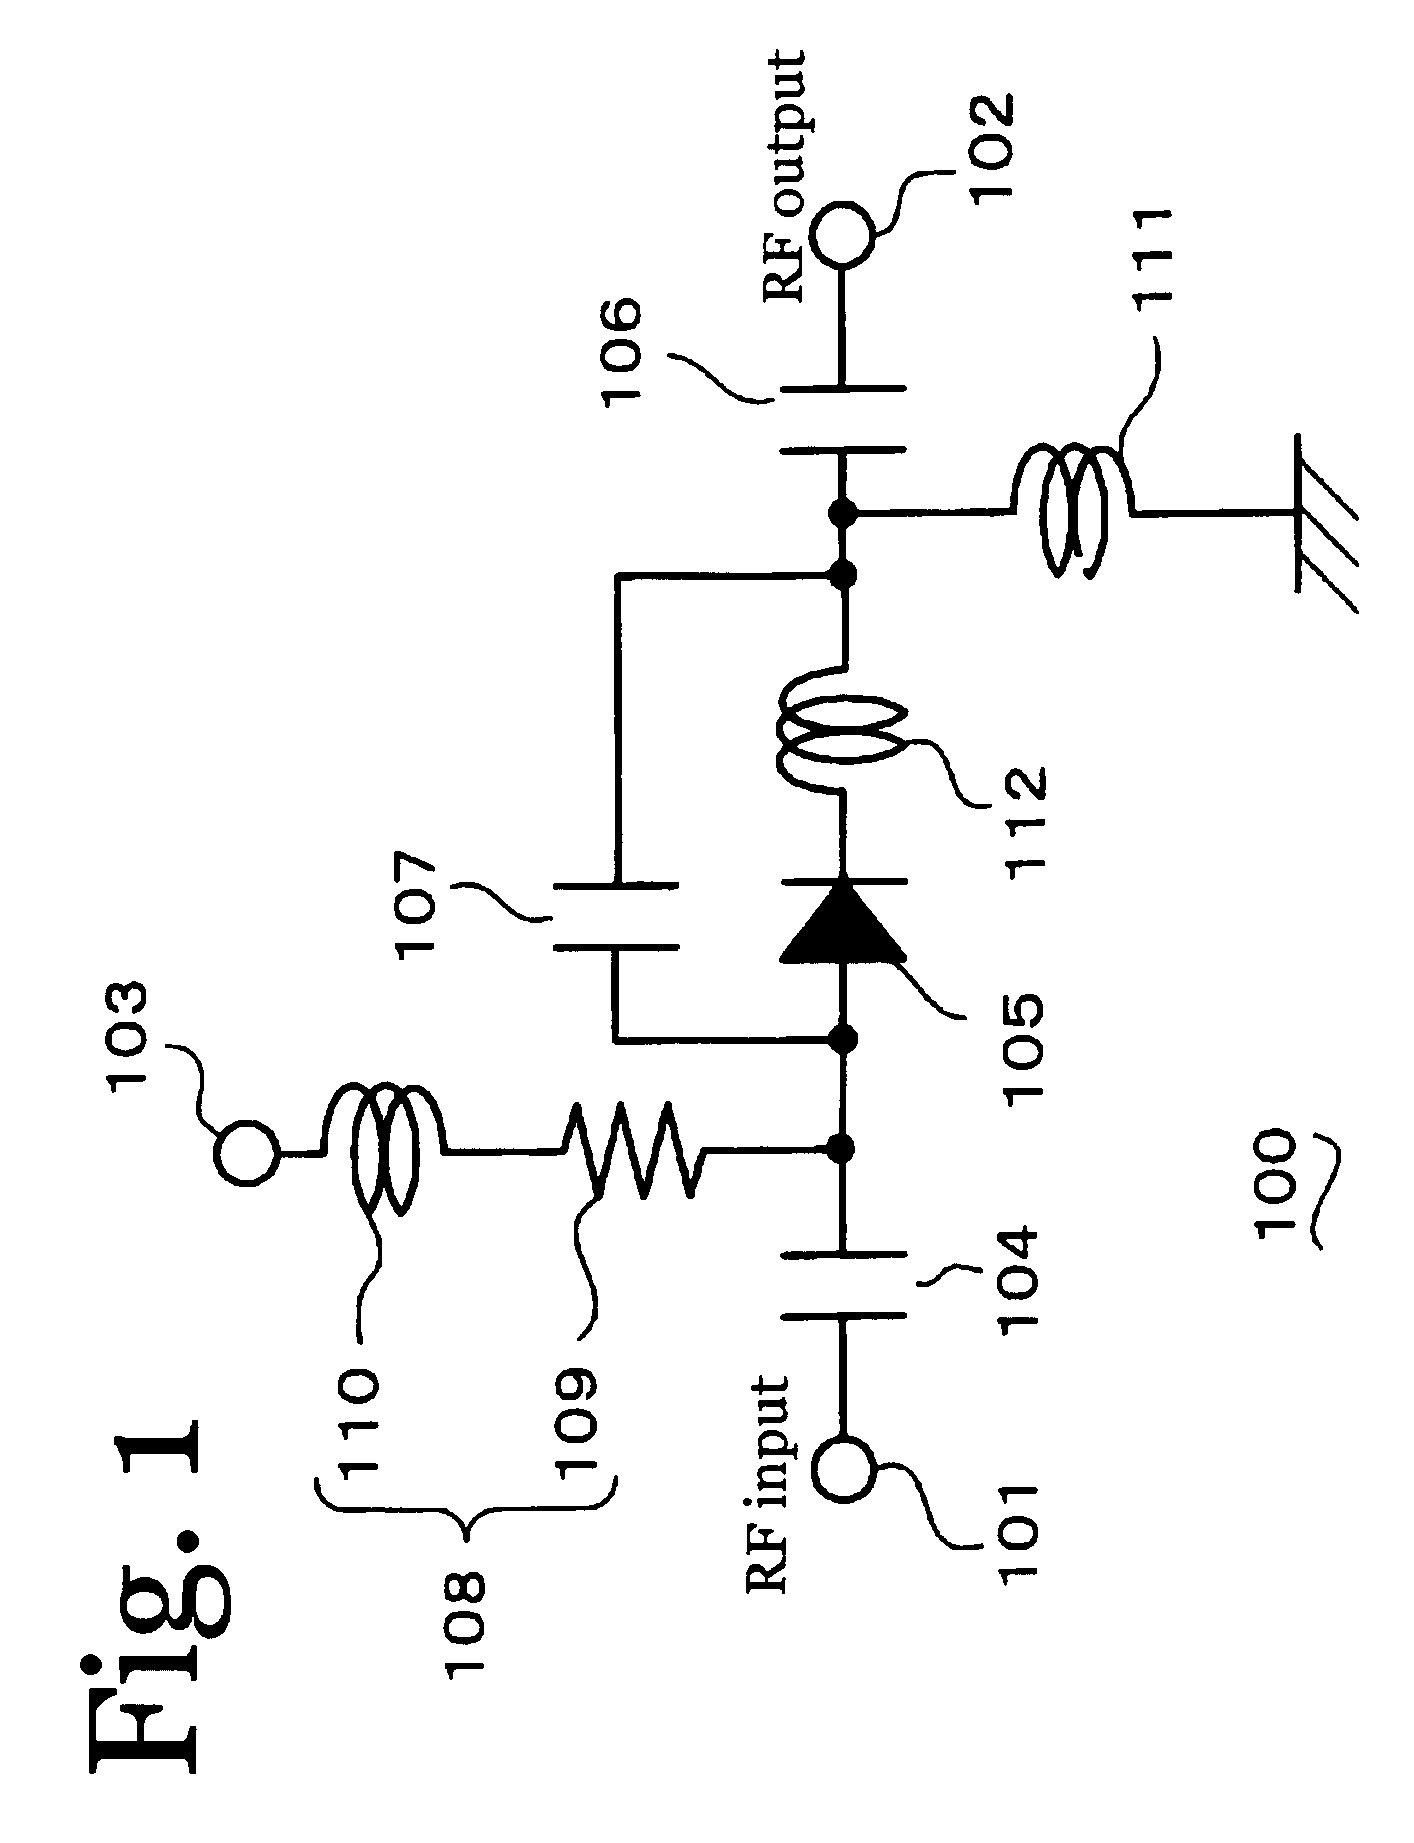 Distortion compensation circuit